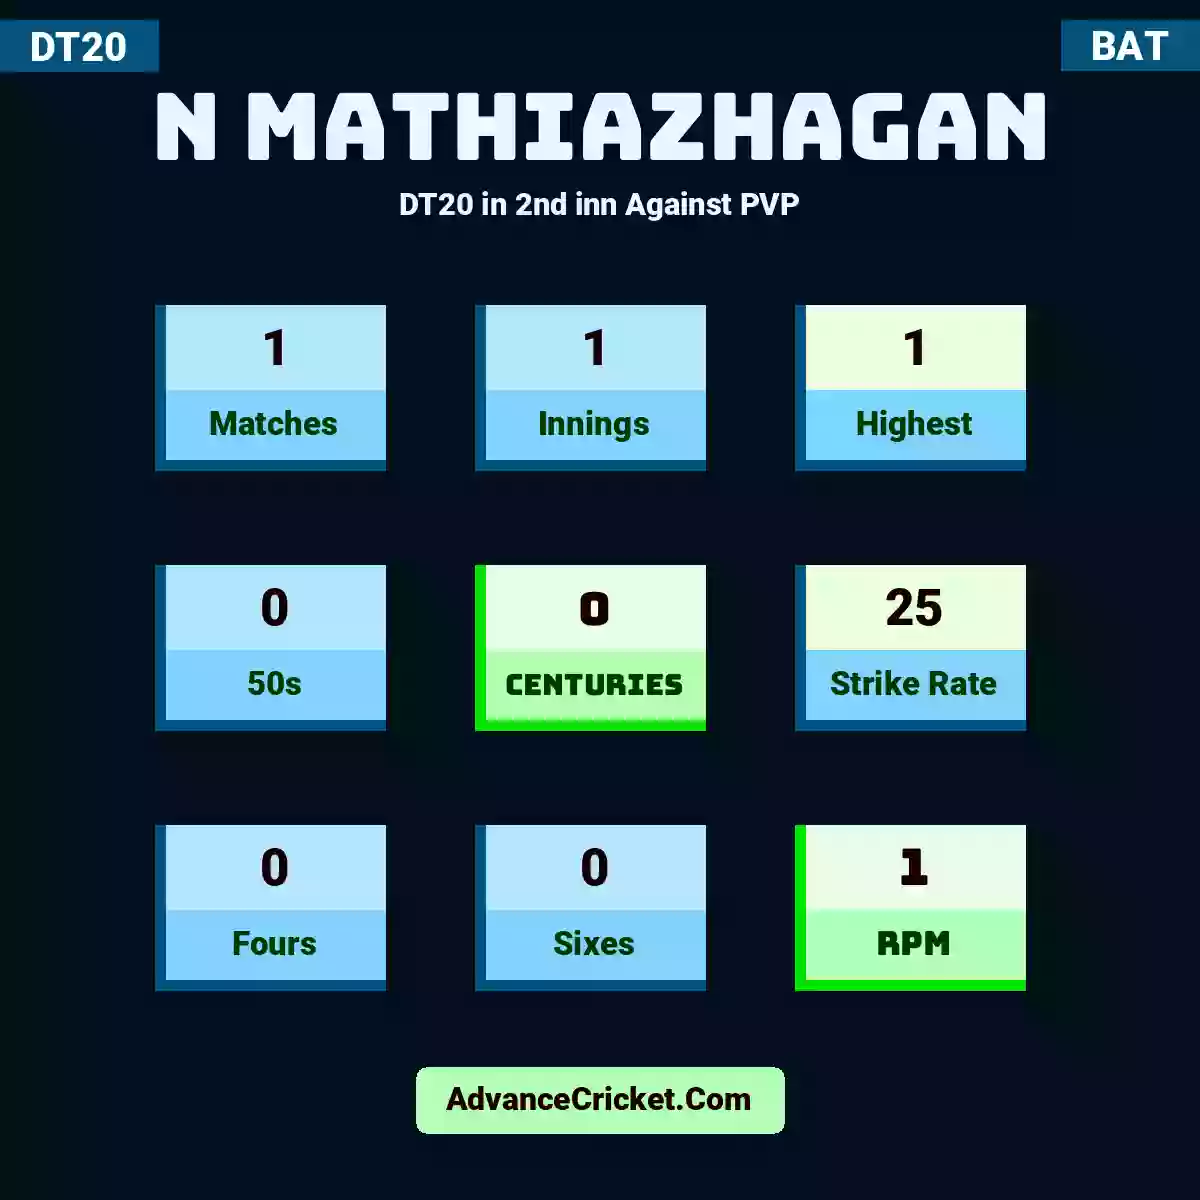 N Mathiazhagan DT20  in 2nd inn Against PVP, N Mathiazhagan played 1 matches, scored 1 runs as highest, 0 half-centuries, and 0 centuries, with a strike rate of 25. N.Mathiazhagan hit 0 fours and 0 sixes, with an RPM of 1.